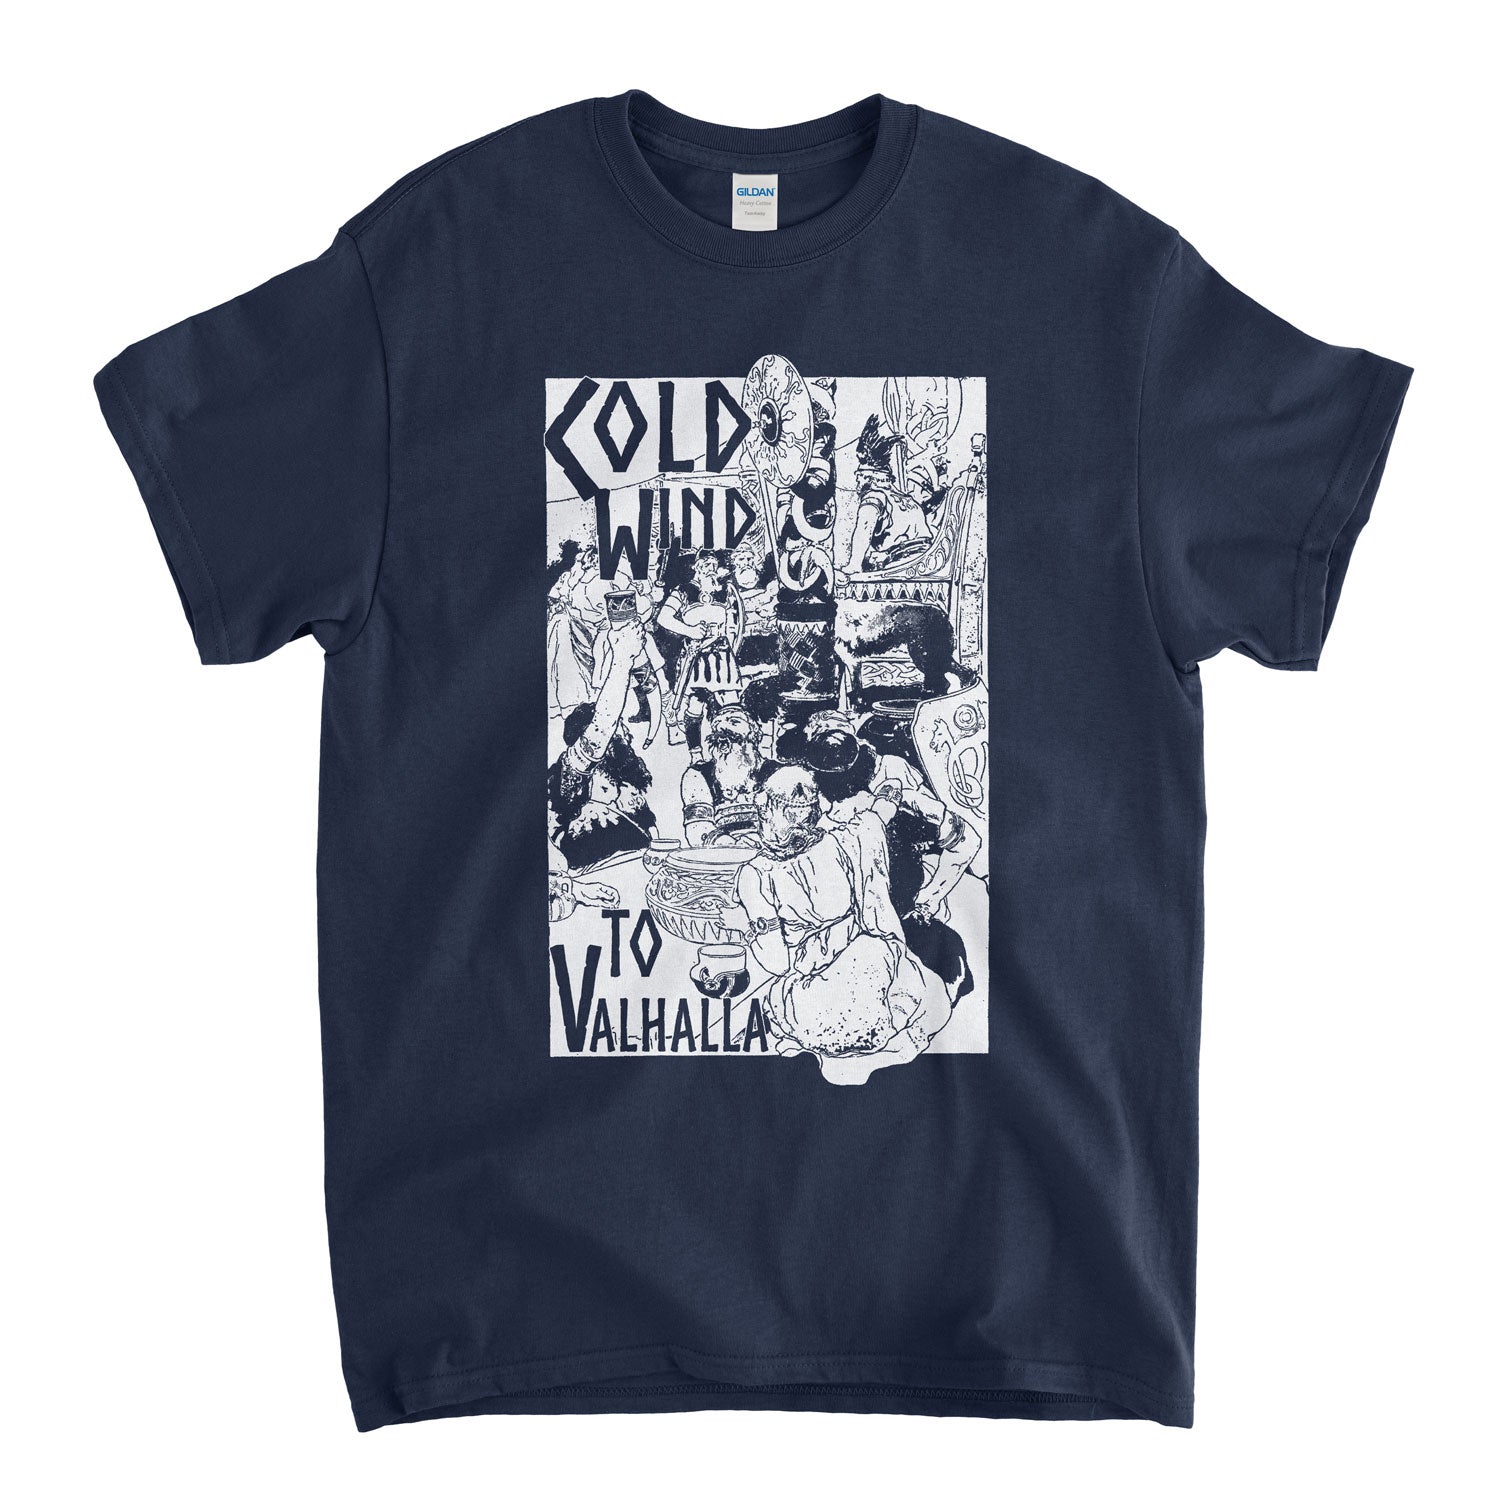 Cold Wind To Valhalla Poster T Shirt An Old Skool Hooligans Prog Original Full colour